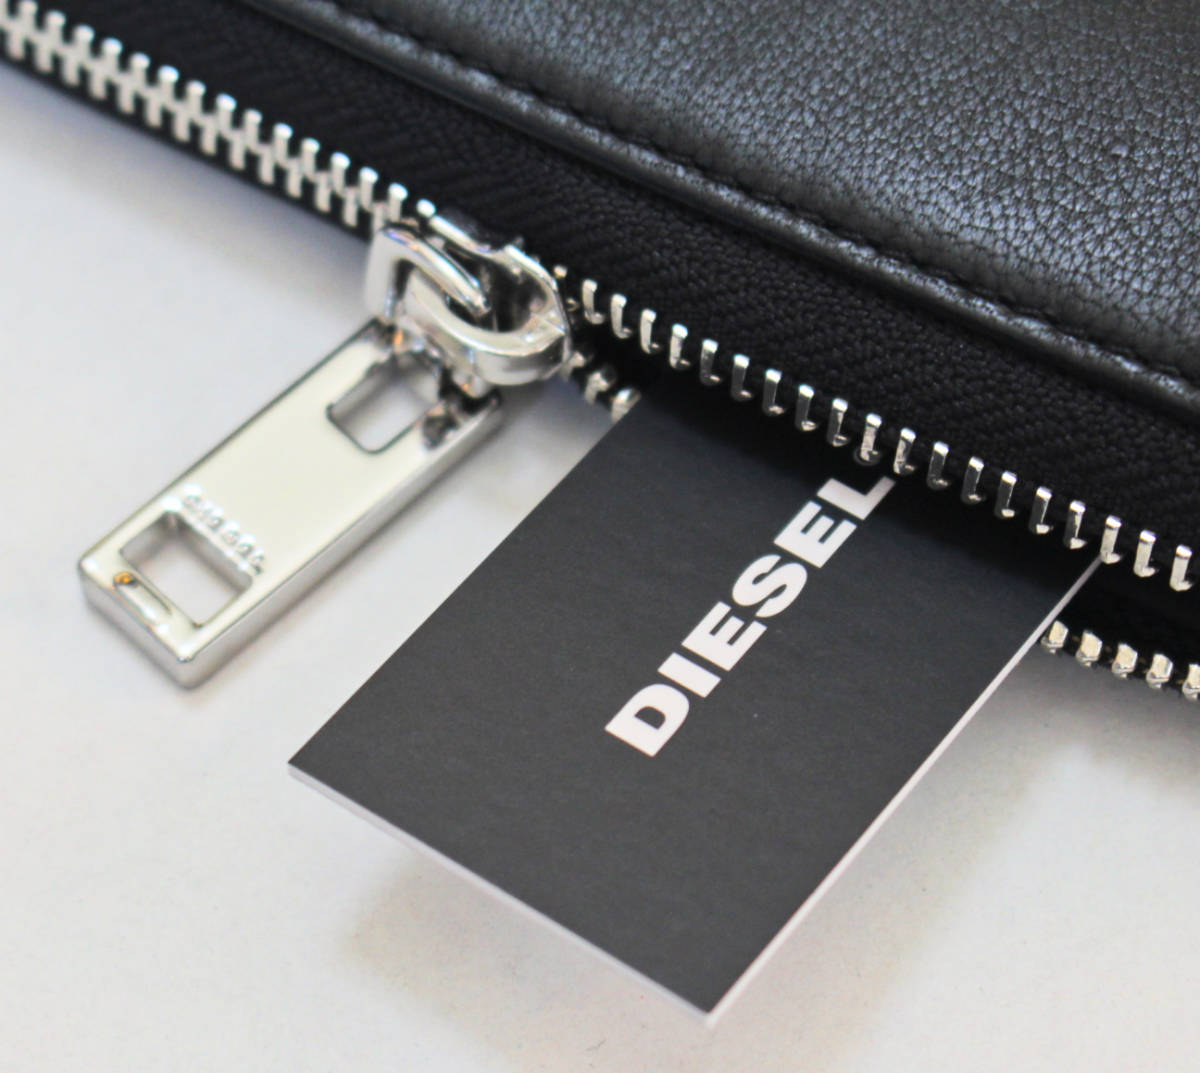 《DIESEL ディーゼル》新品 コーデュラナイロン使用 レザー ラウンドファスナー式長財布 ウォレット プレゼントにも ラッピング袋付 A5097